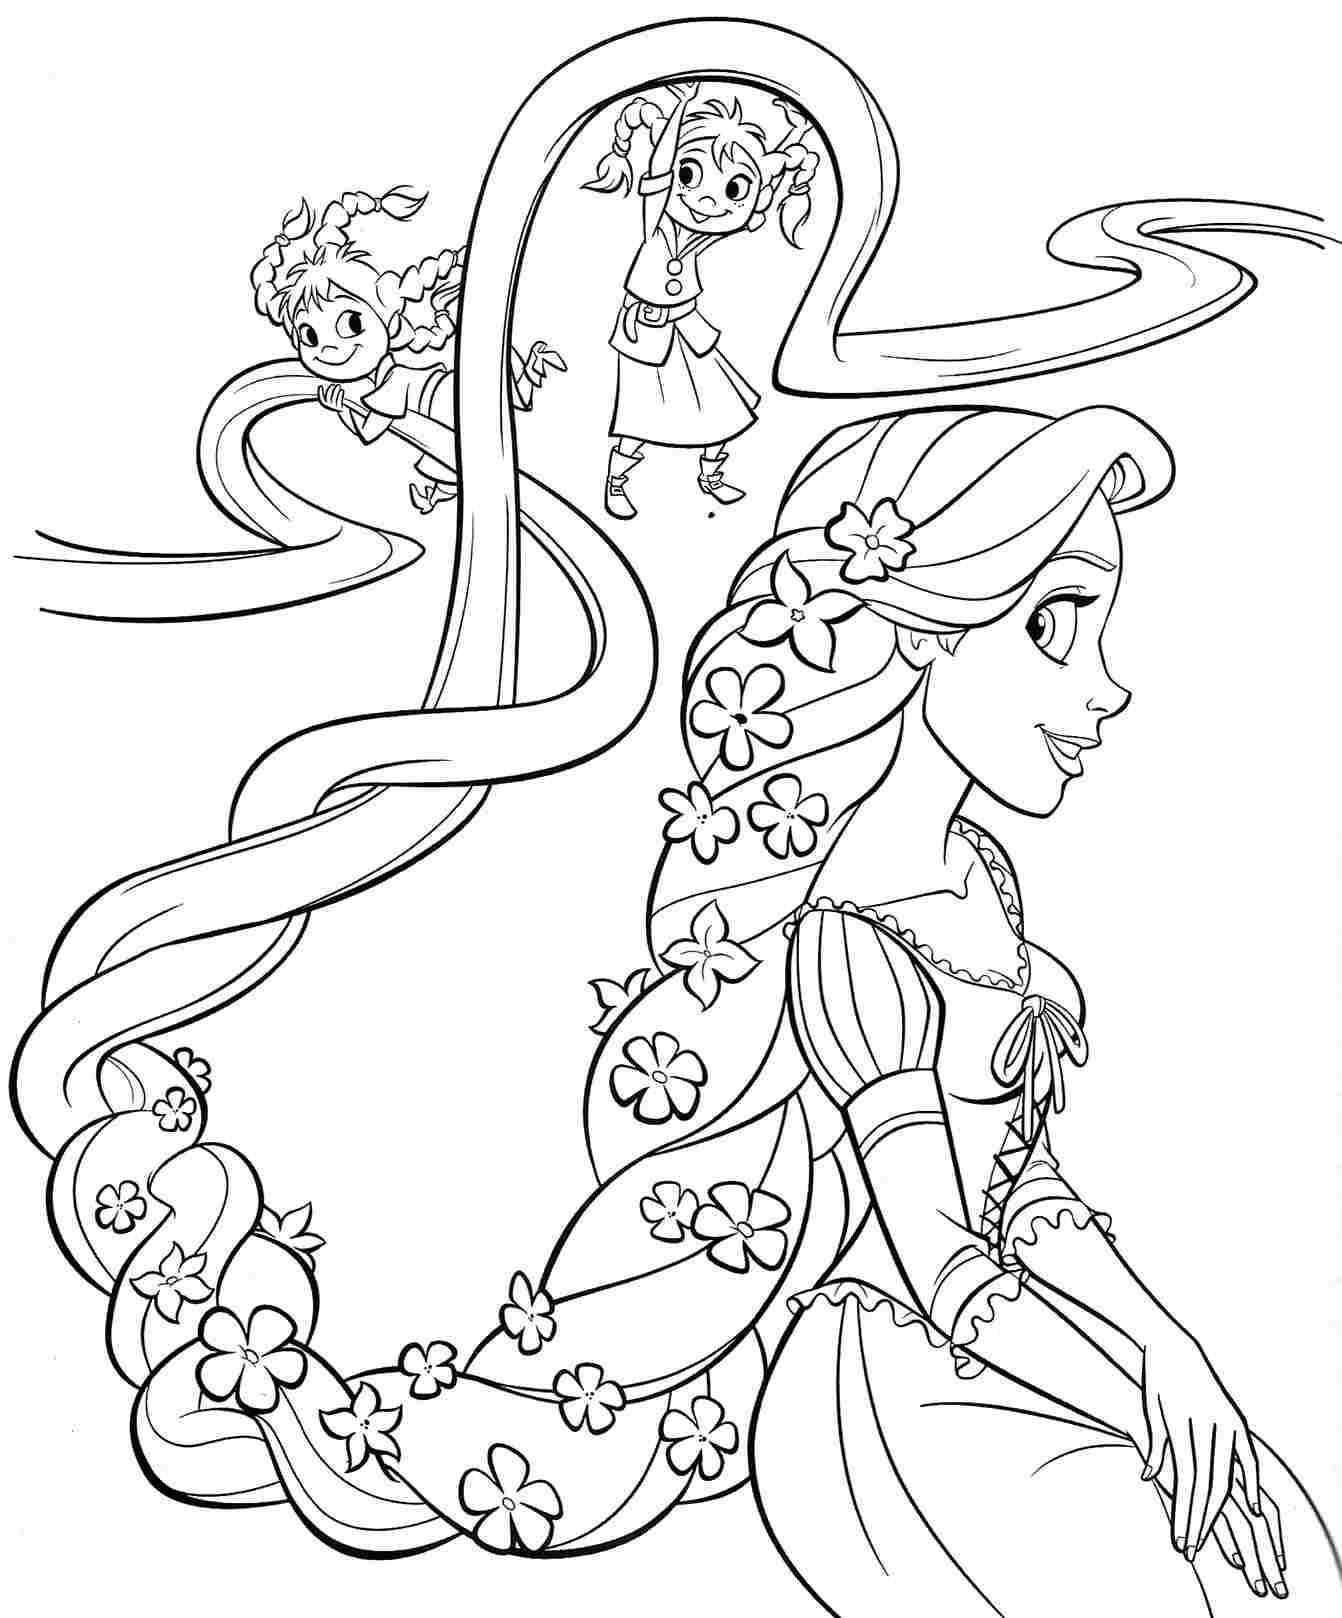 Coloring Page Of Disney Princess